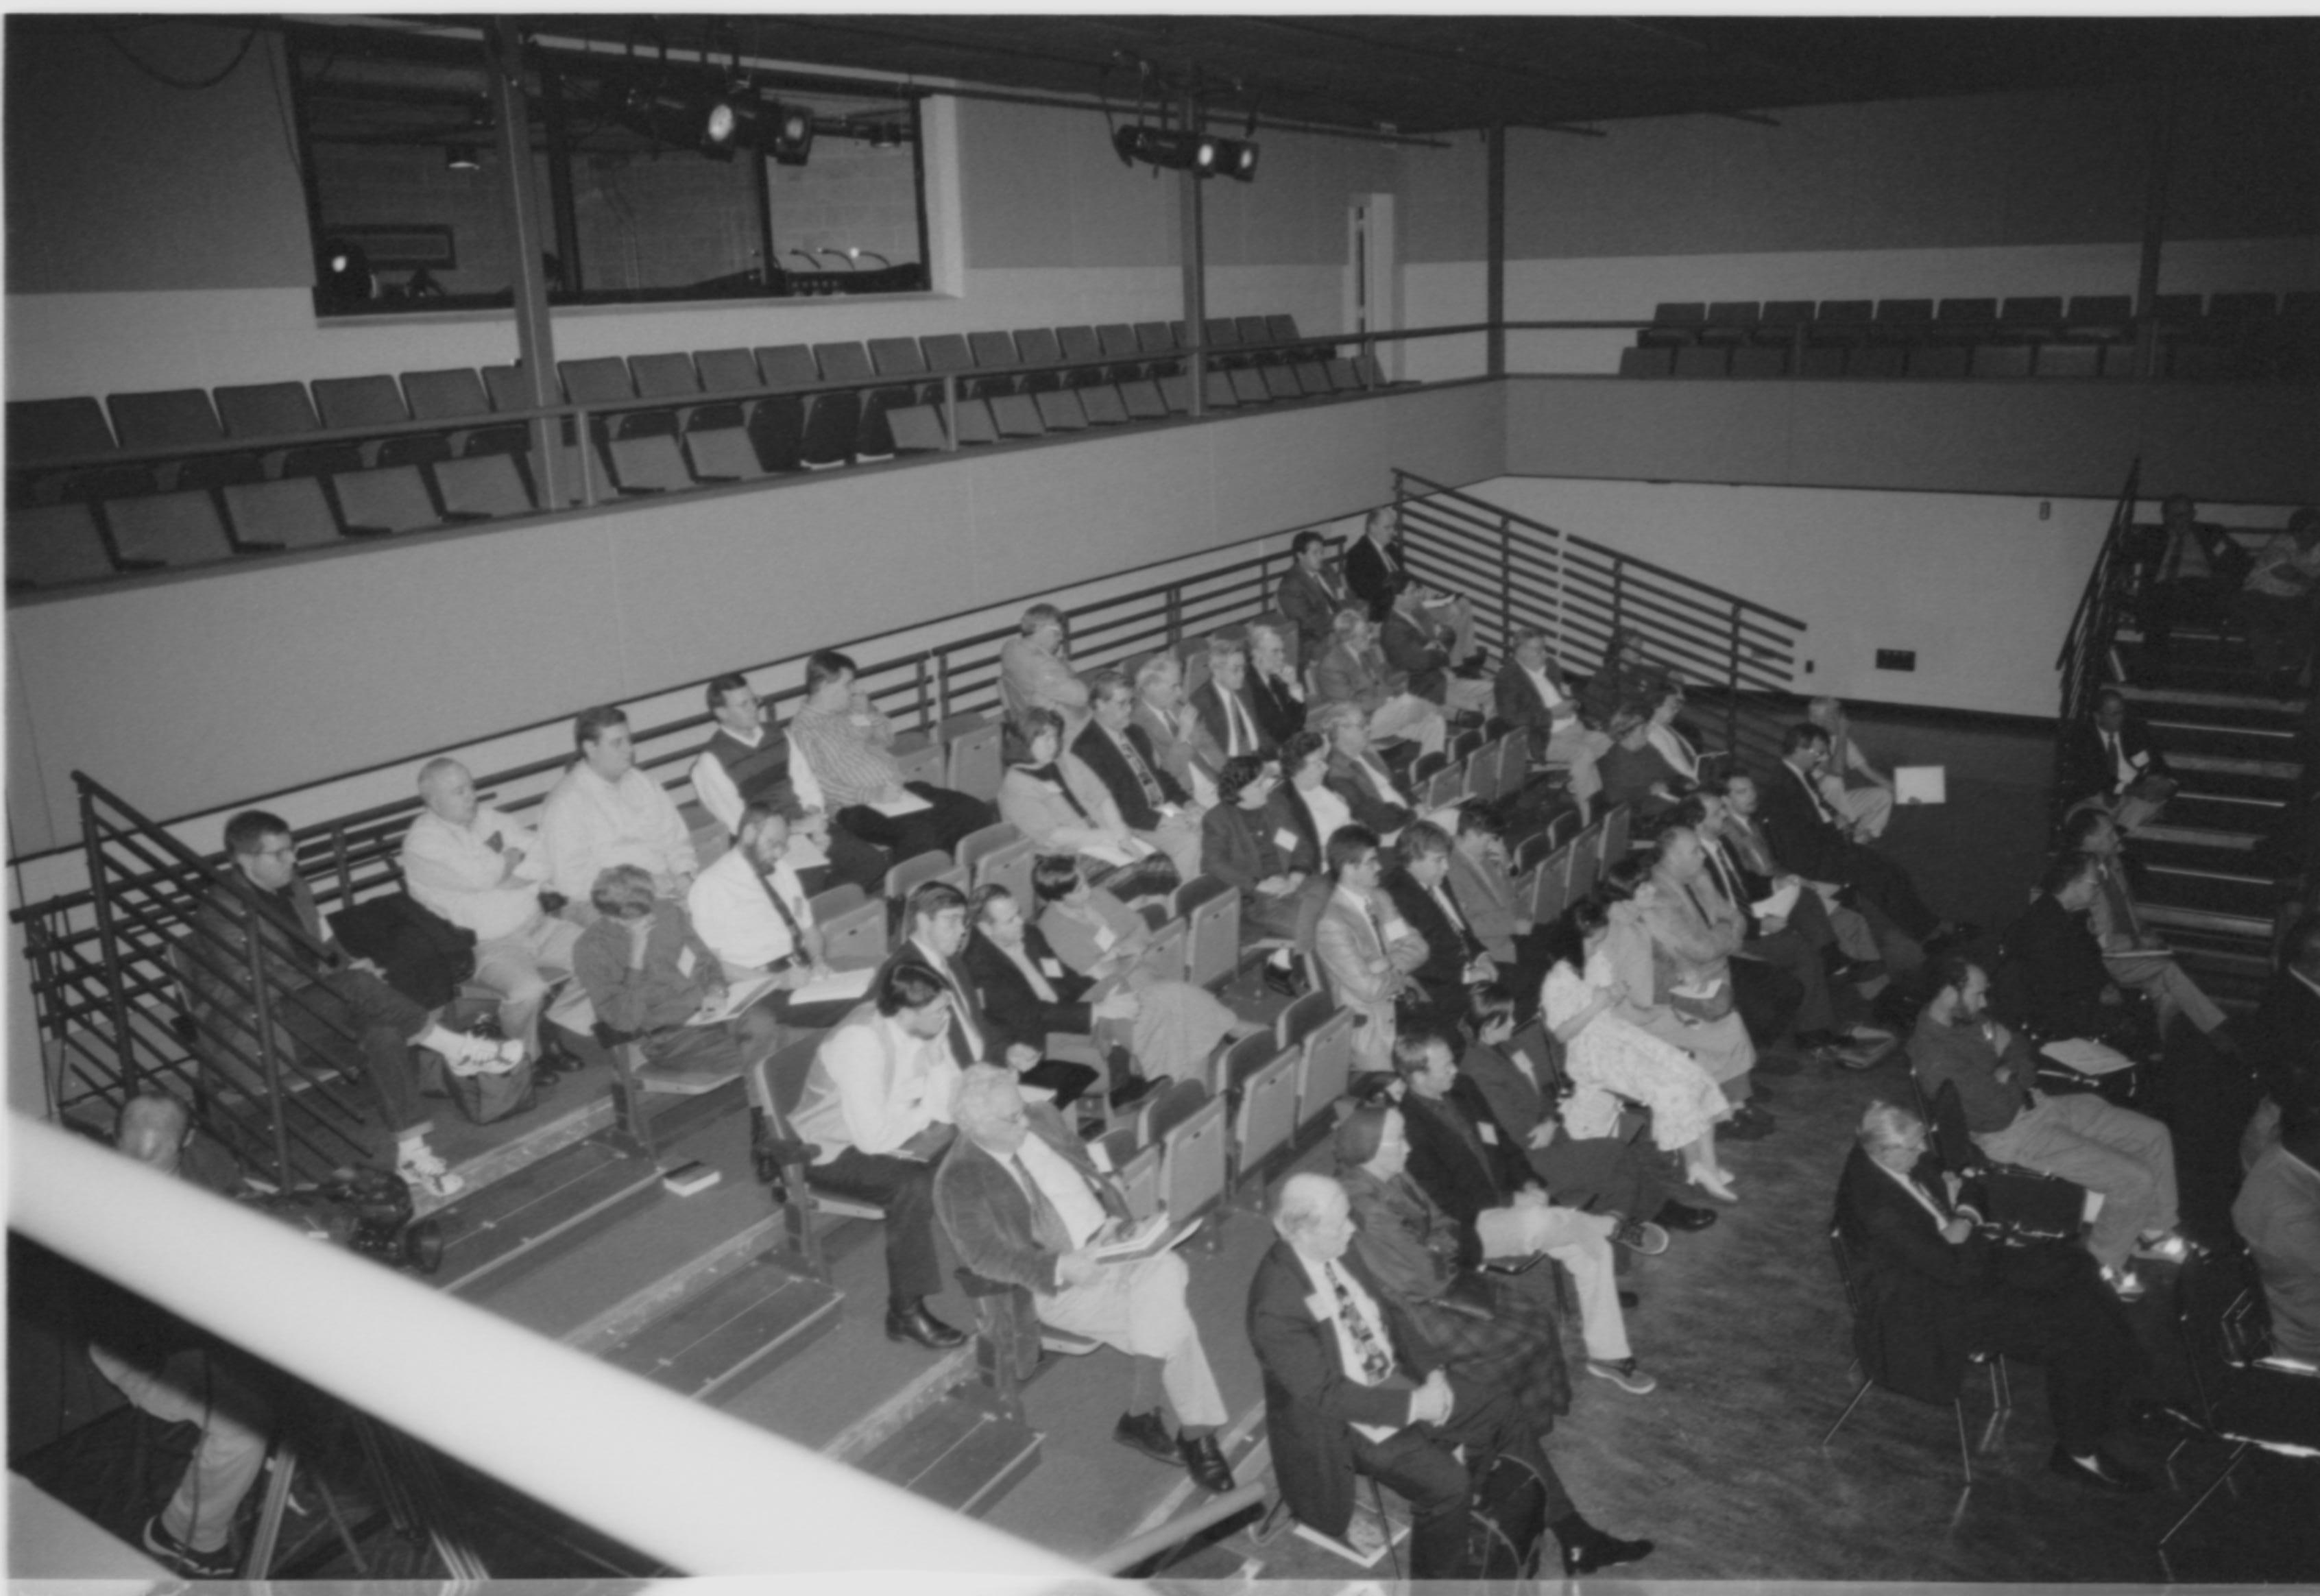 Distant view of audience 1999-16; 34 Colloquium, 1999